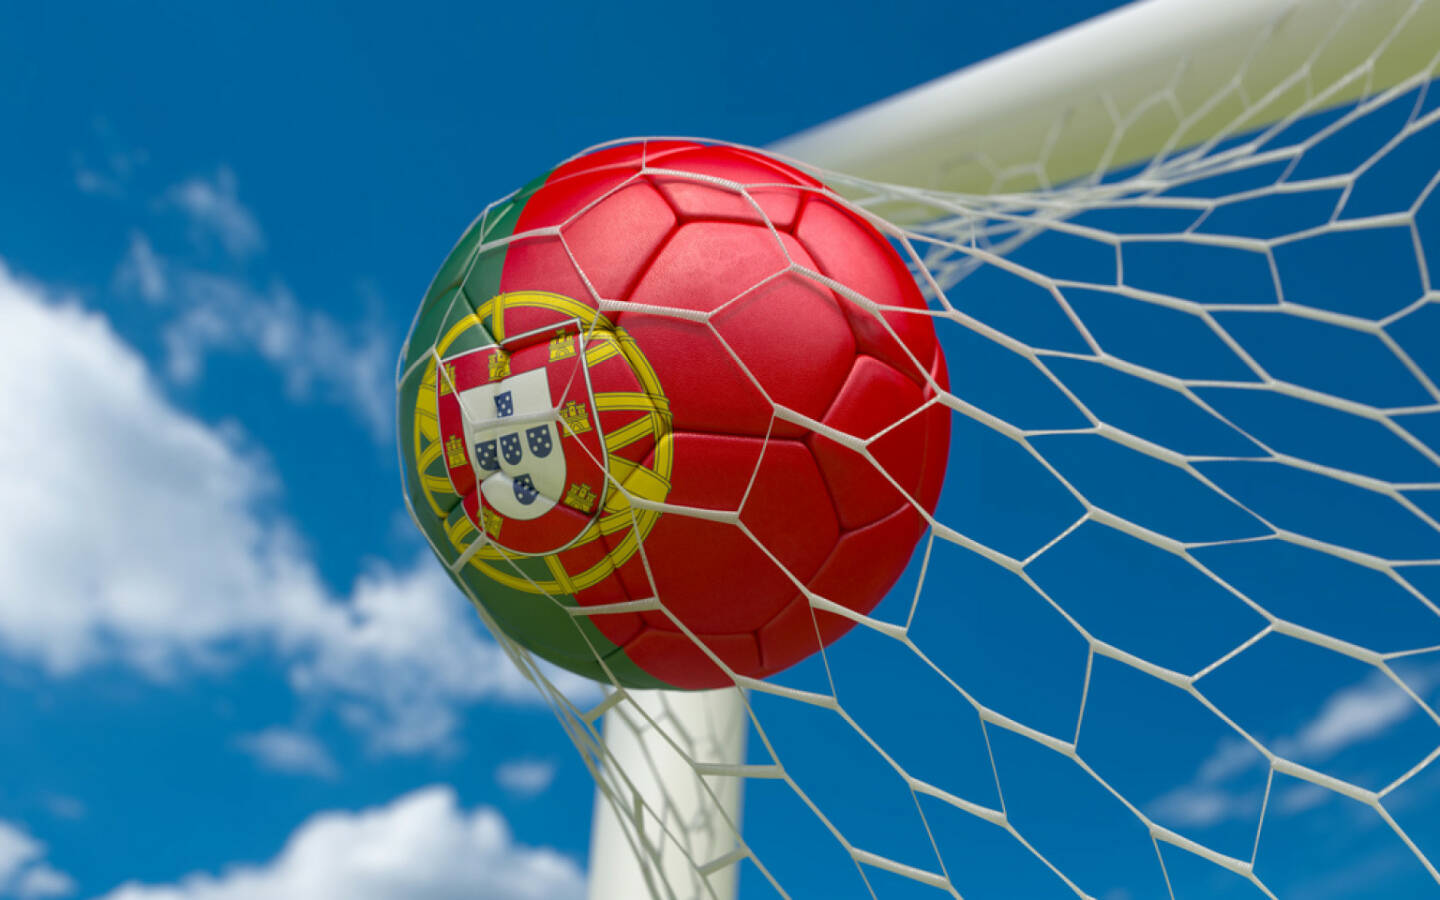 Torschuss, Tor, Fussball, Portugal, goal, Wettkampf, http://www.shutterstock.com/de/pic-174327623/stock-photo-portugal-flag-and-soccer-ball-football-in-goal-net.html